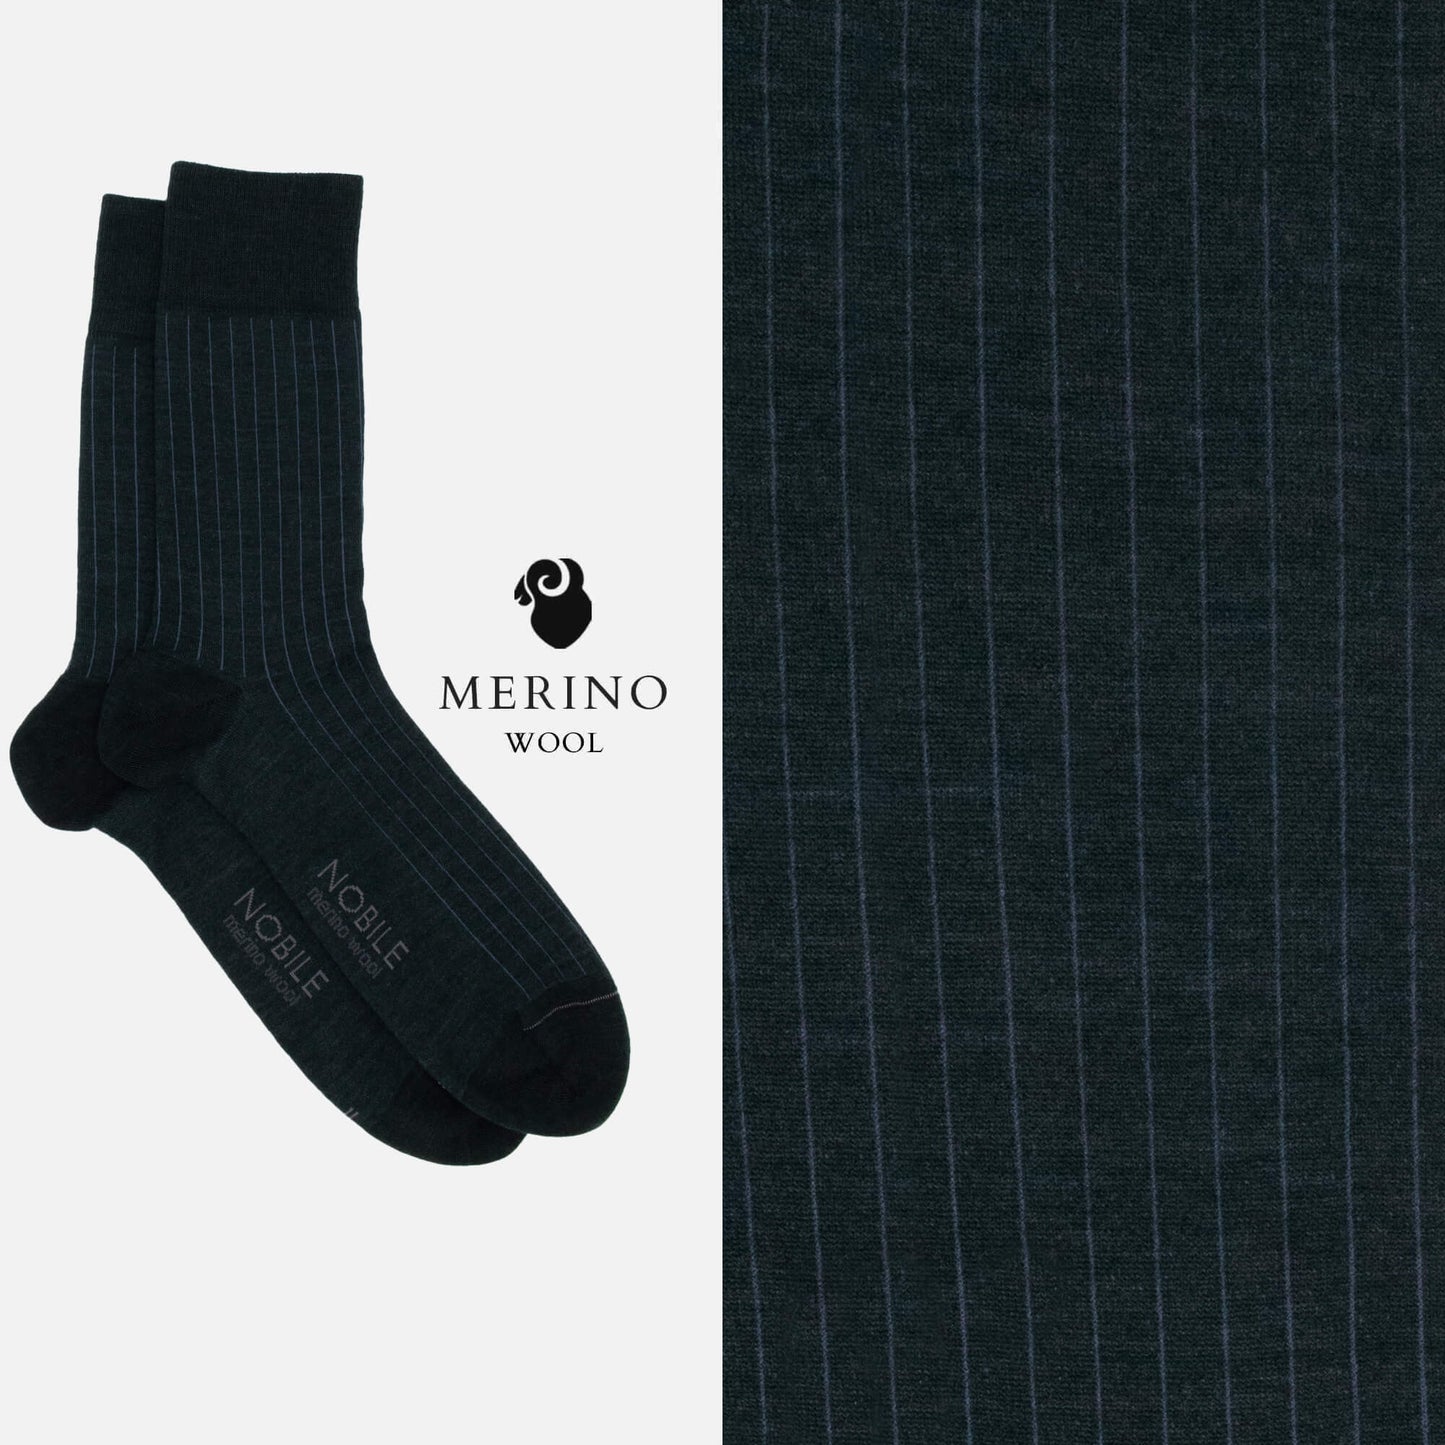 St. Moritz - Box of 6 crew Merino wool socks - Ribs & Dots